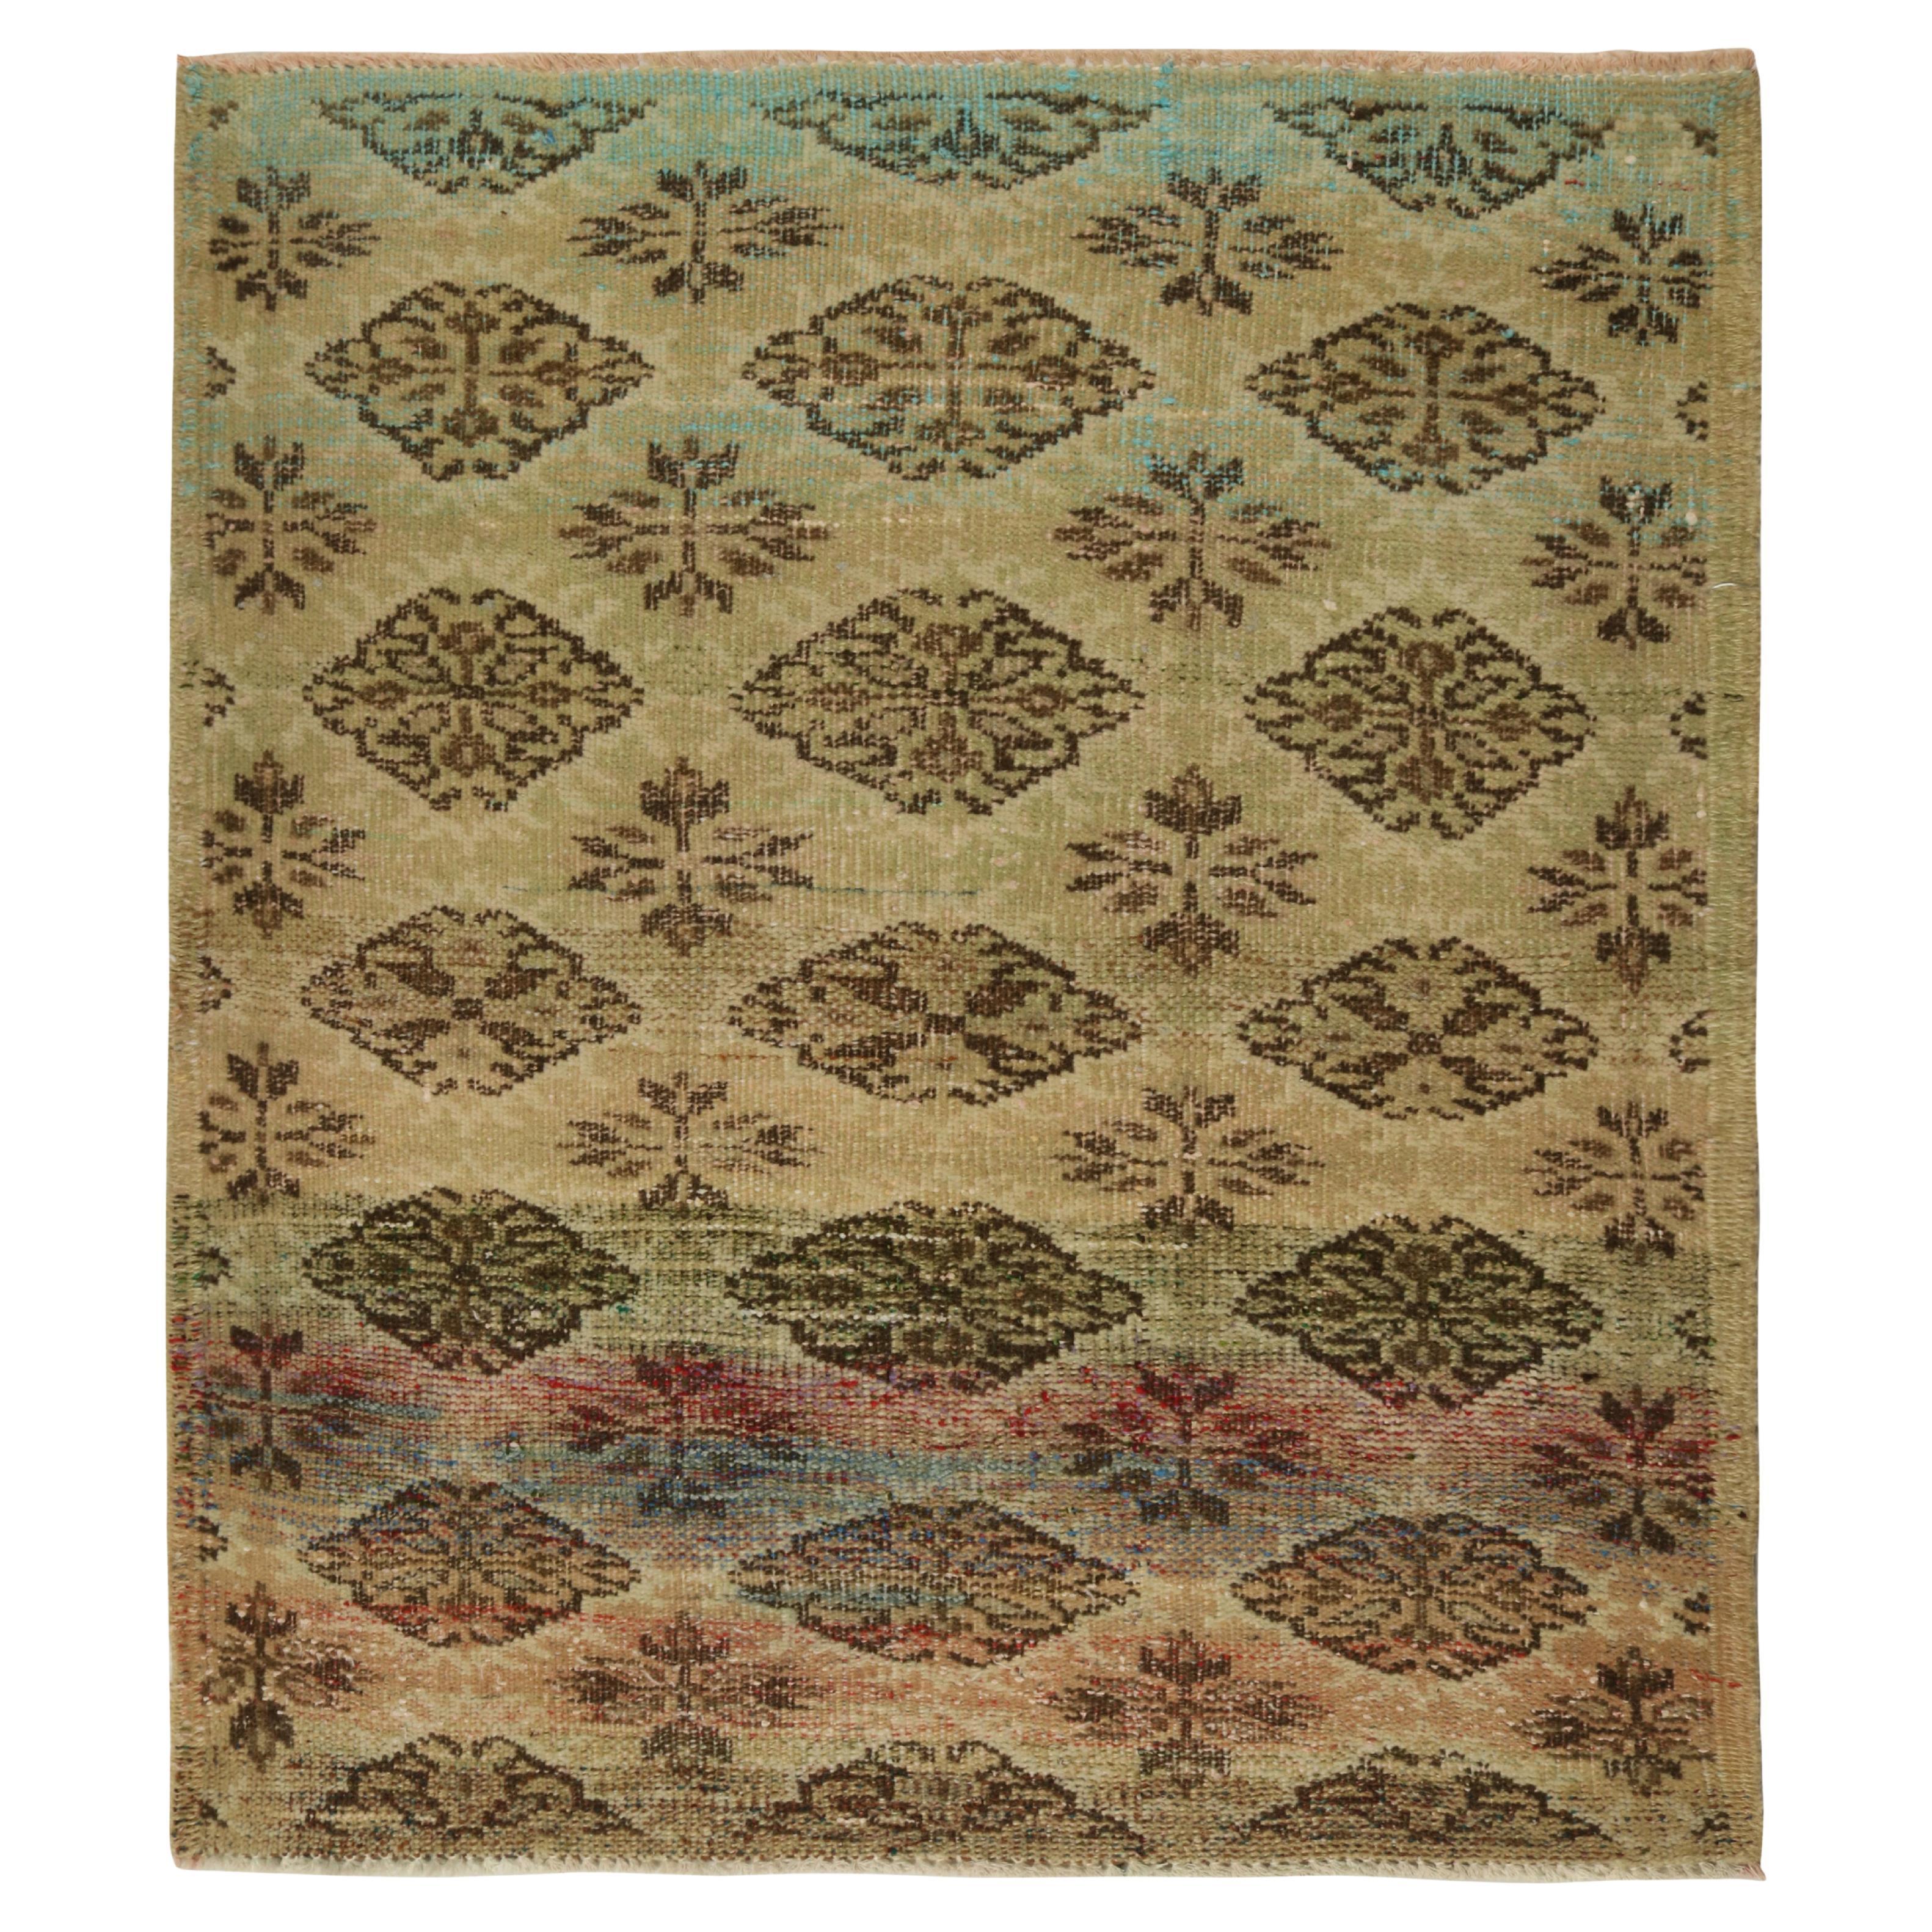 Distressed Style Zeki Muren Rug in Beige-Brown Patterns by Rug & Kilim For Sale